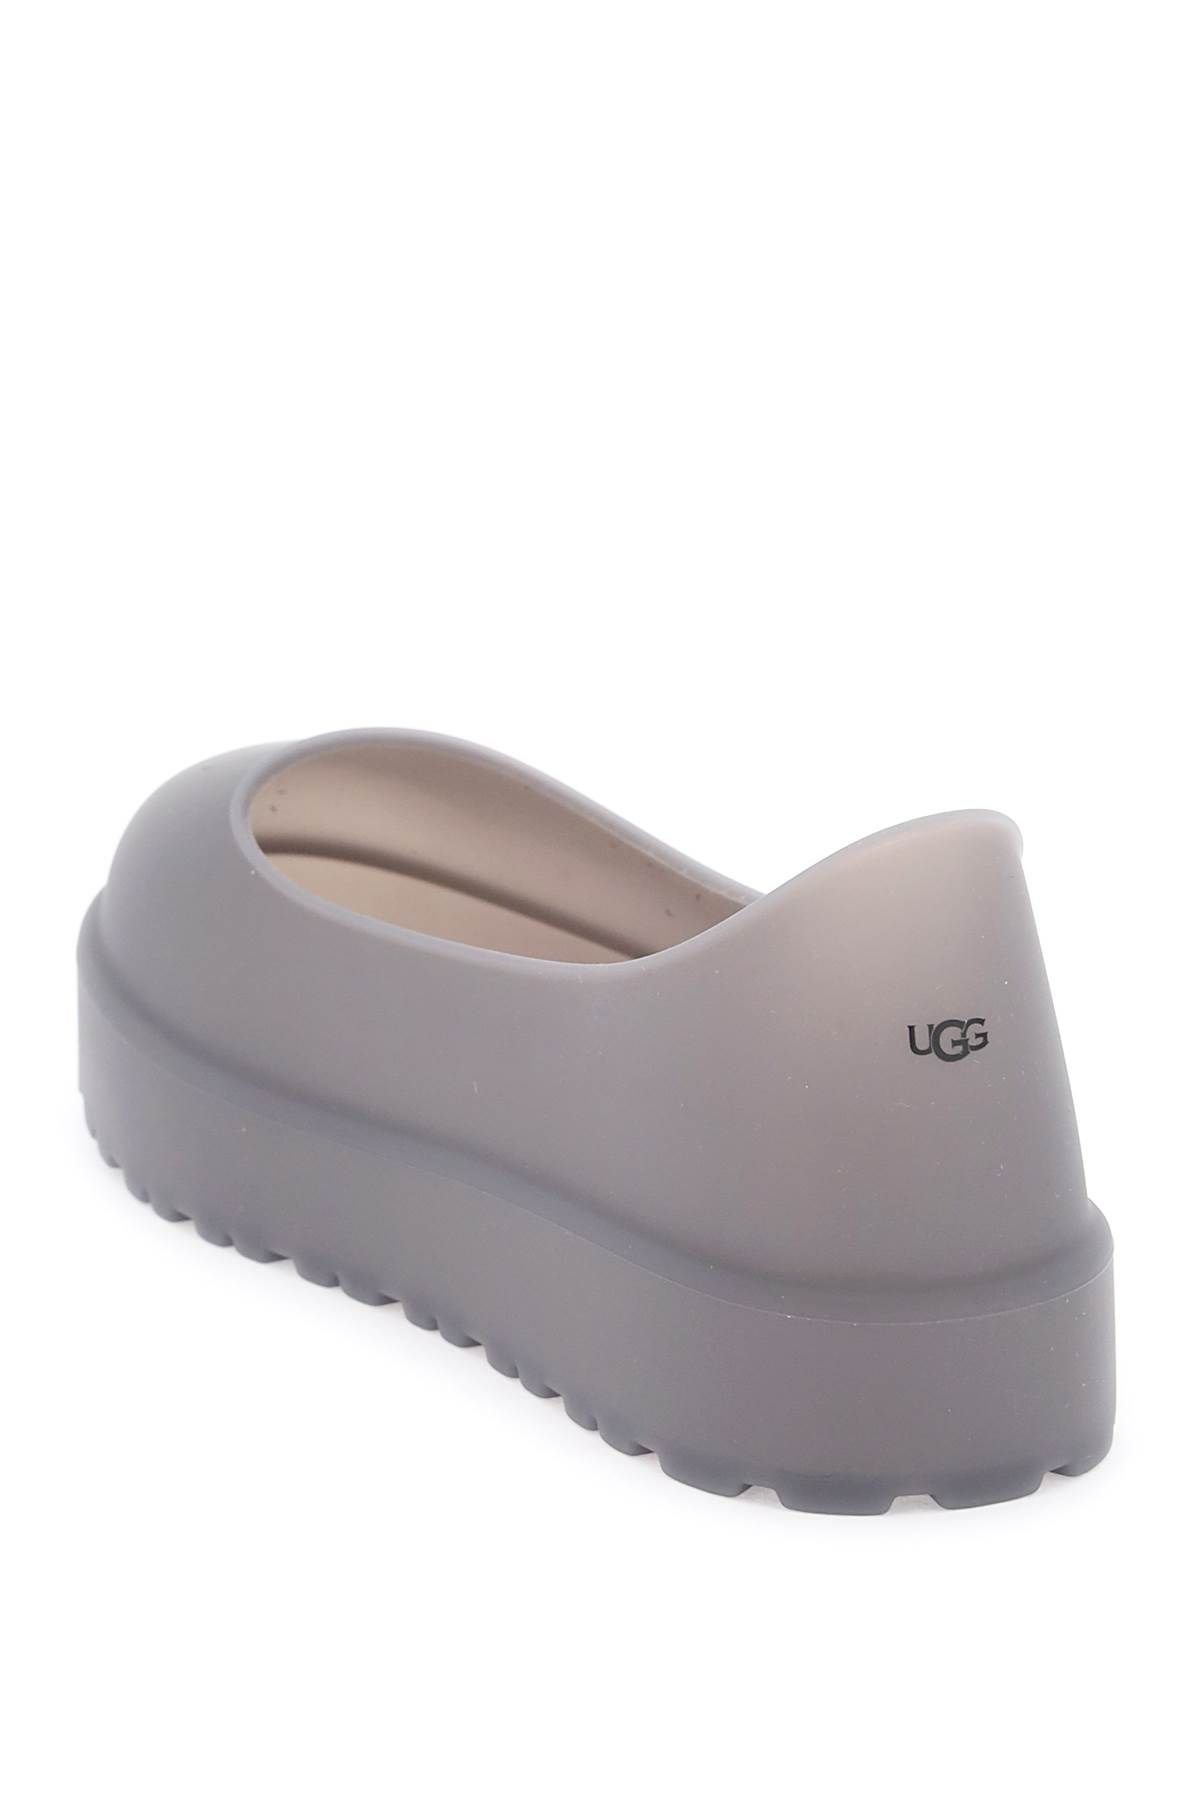 Shop Ugg Guard Shoe Protection In Black,grey